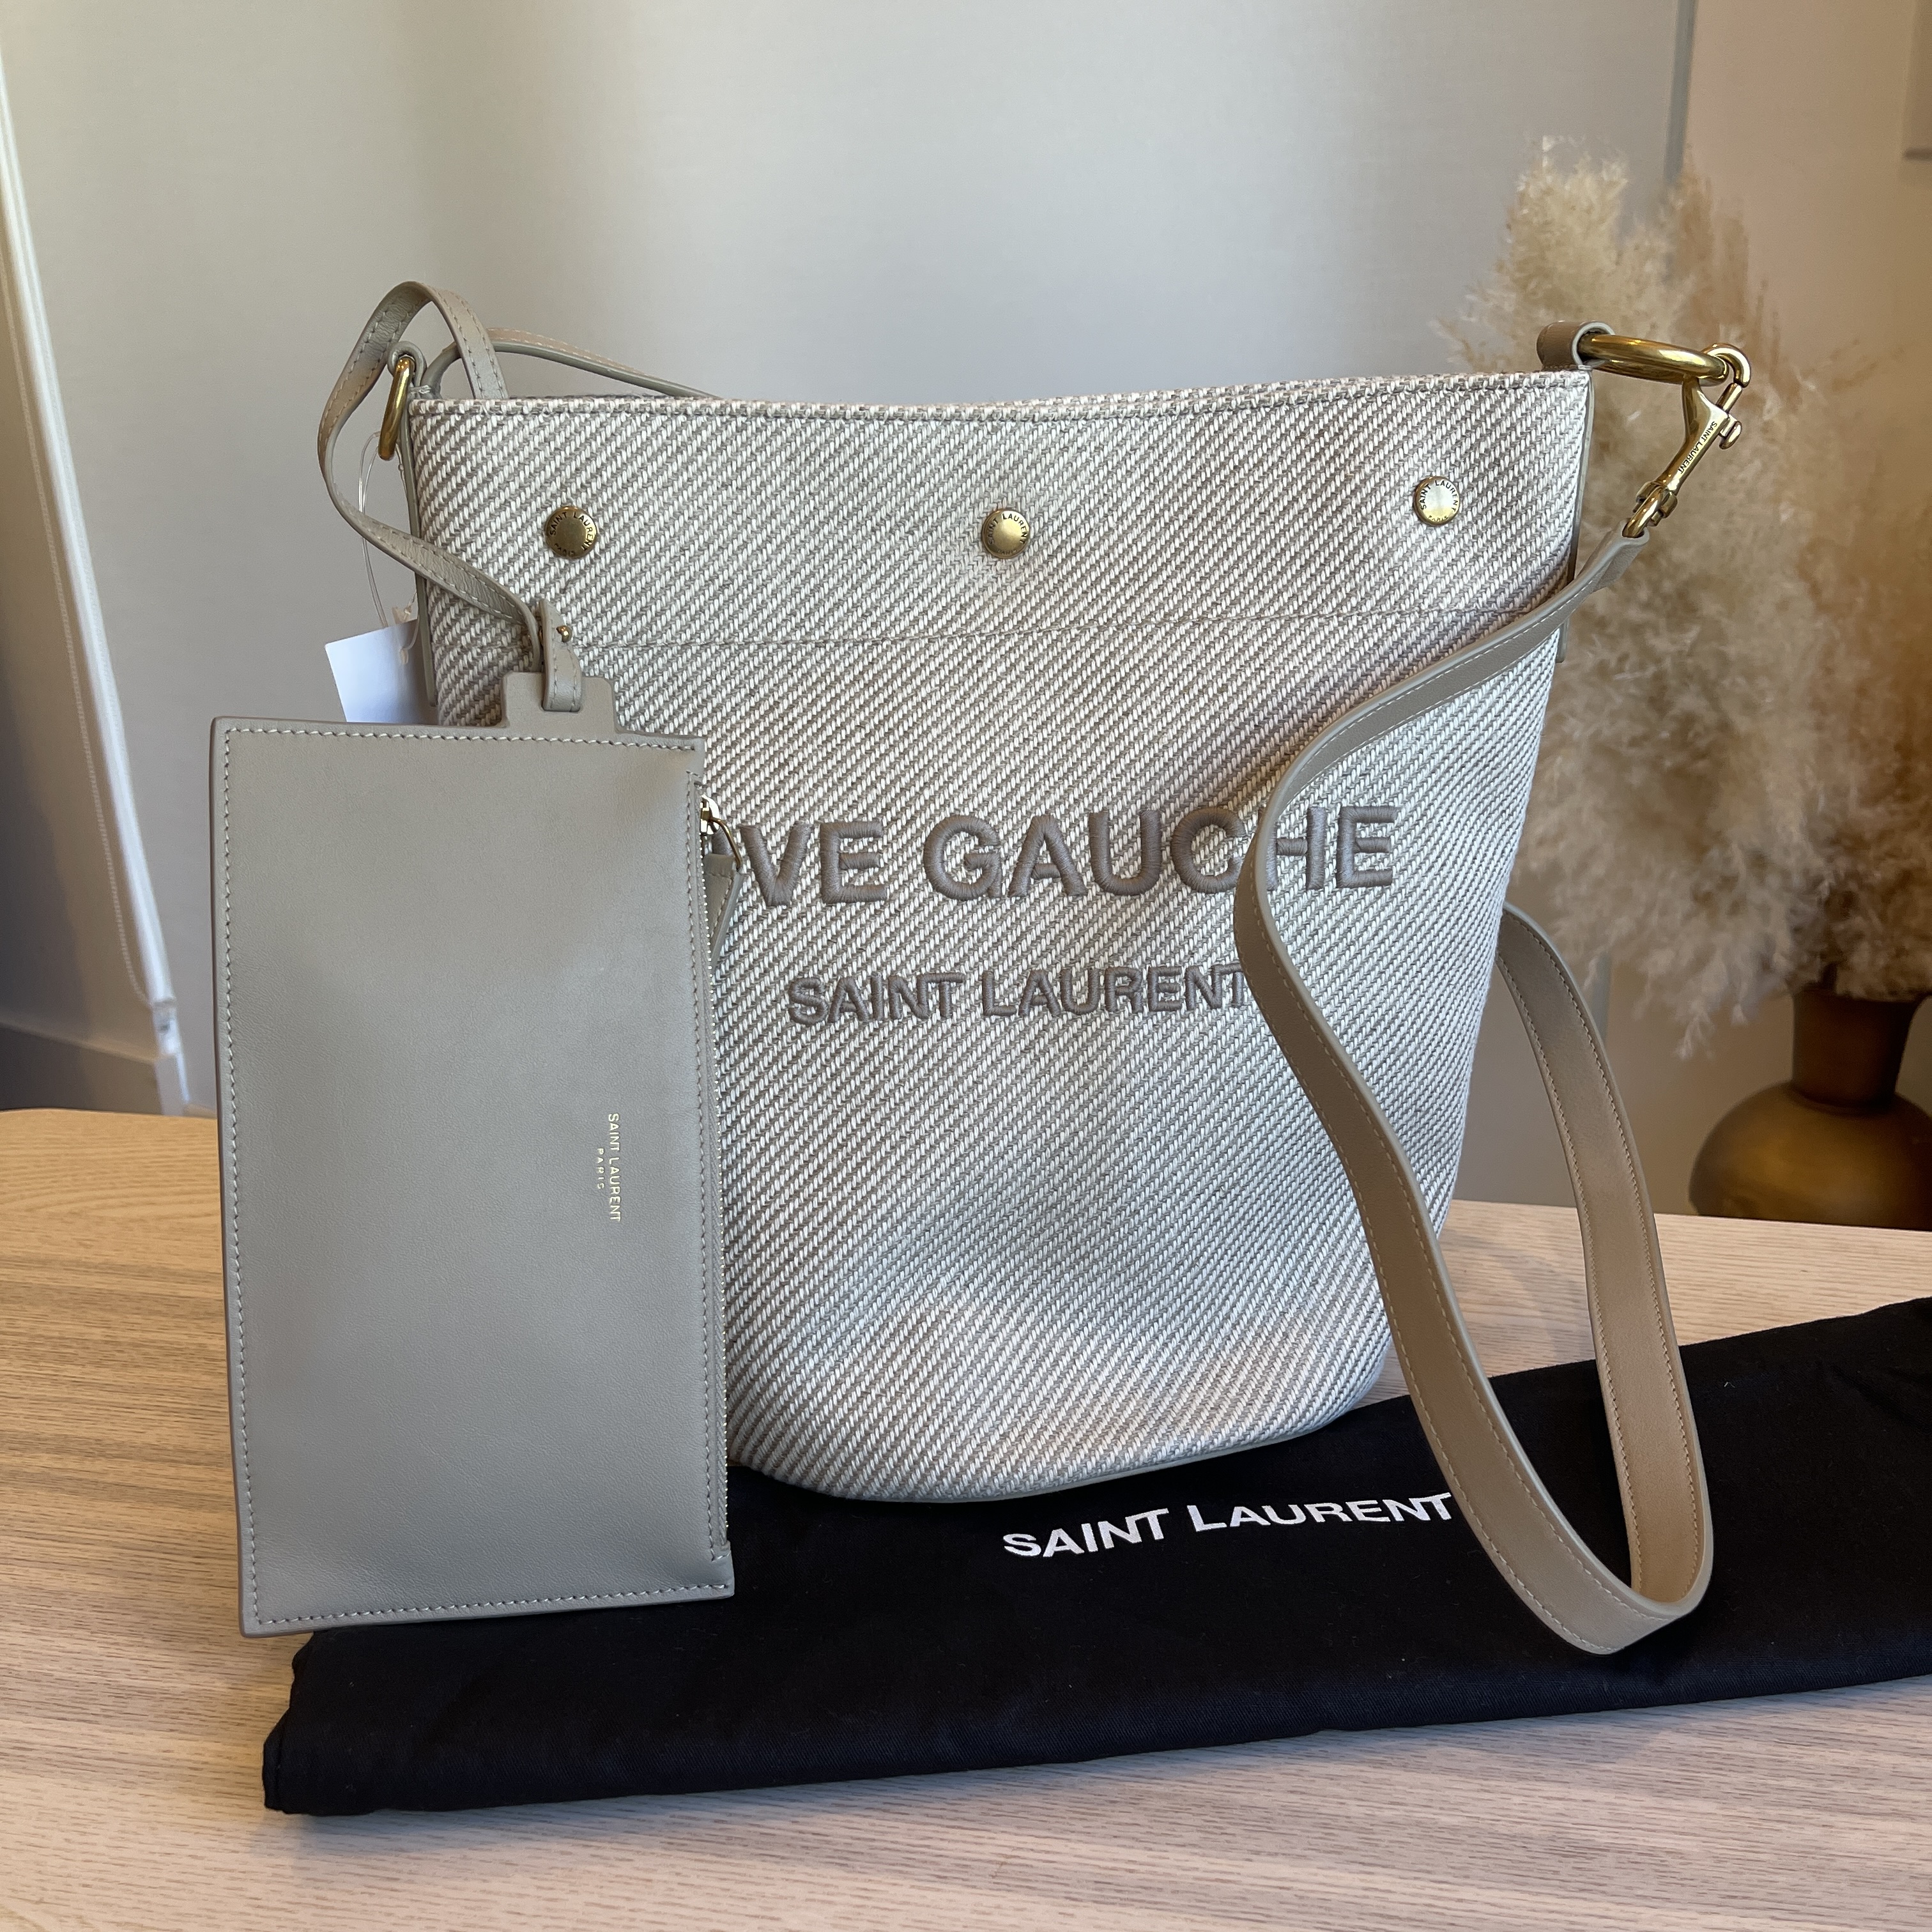 The Saint Laurent Rive Gauche bucket bag is an amazing everyday